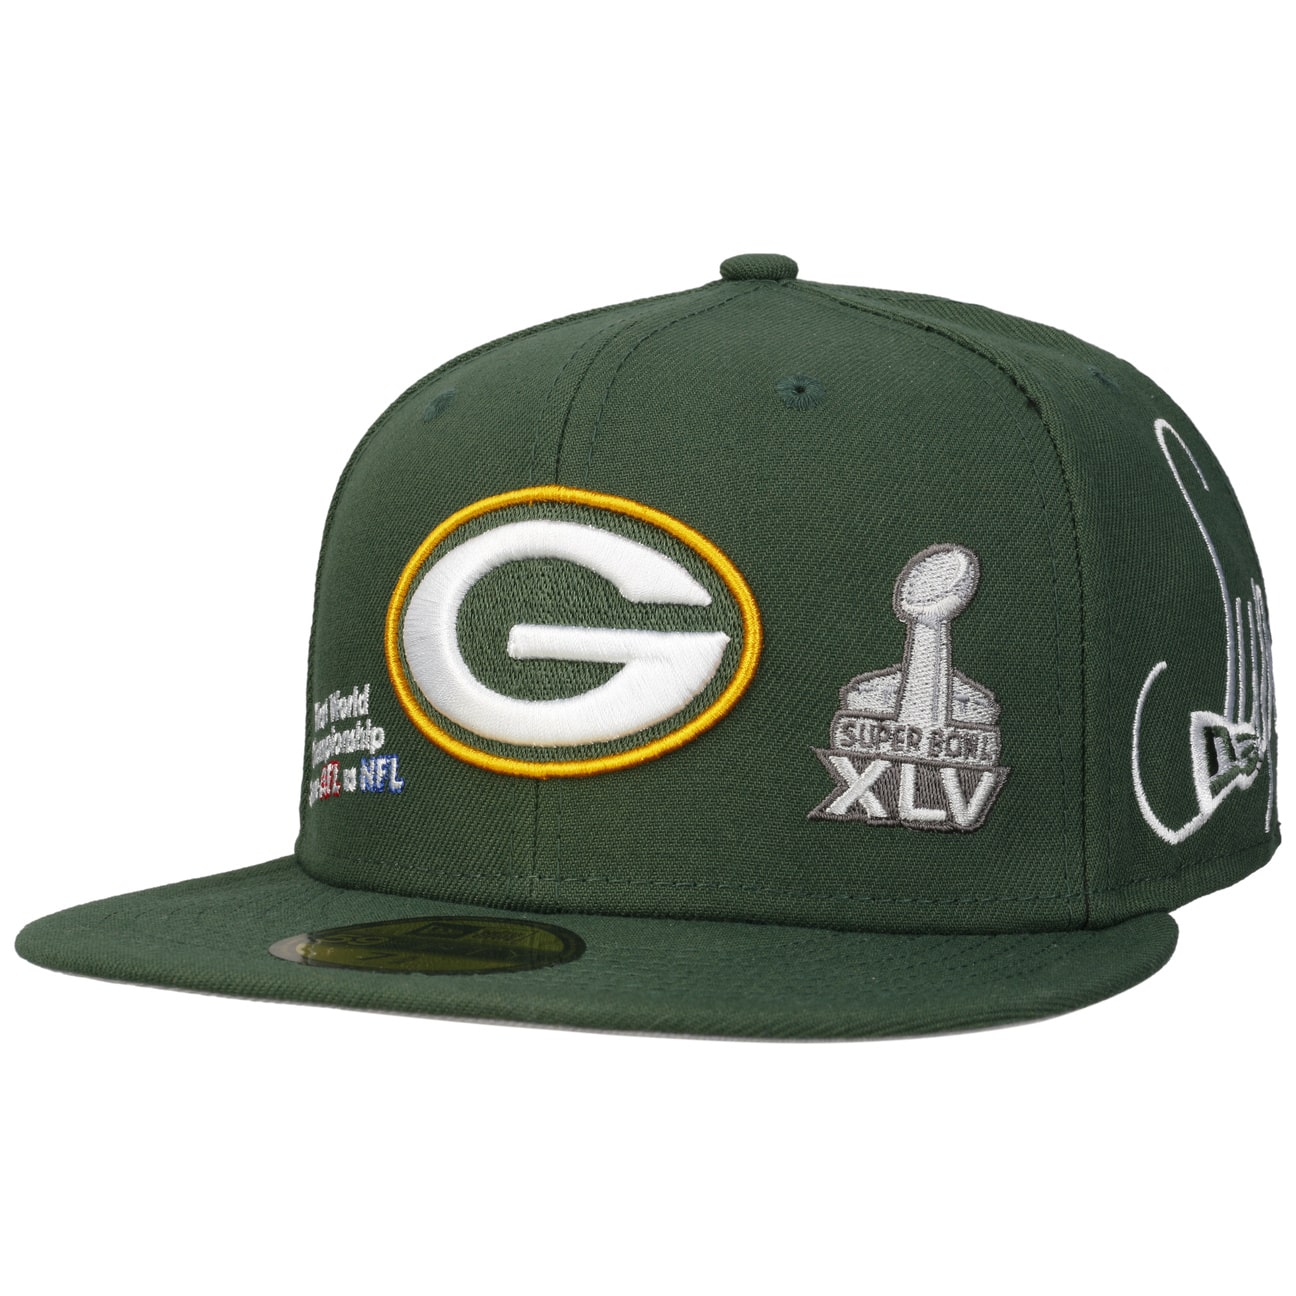 59Fifty Packers Super Bowl XLV Cap by New Era von new era